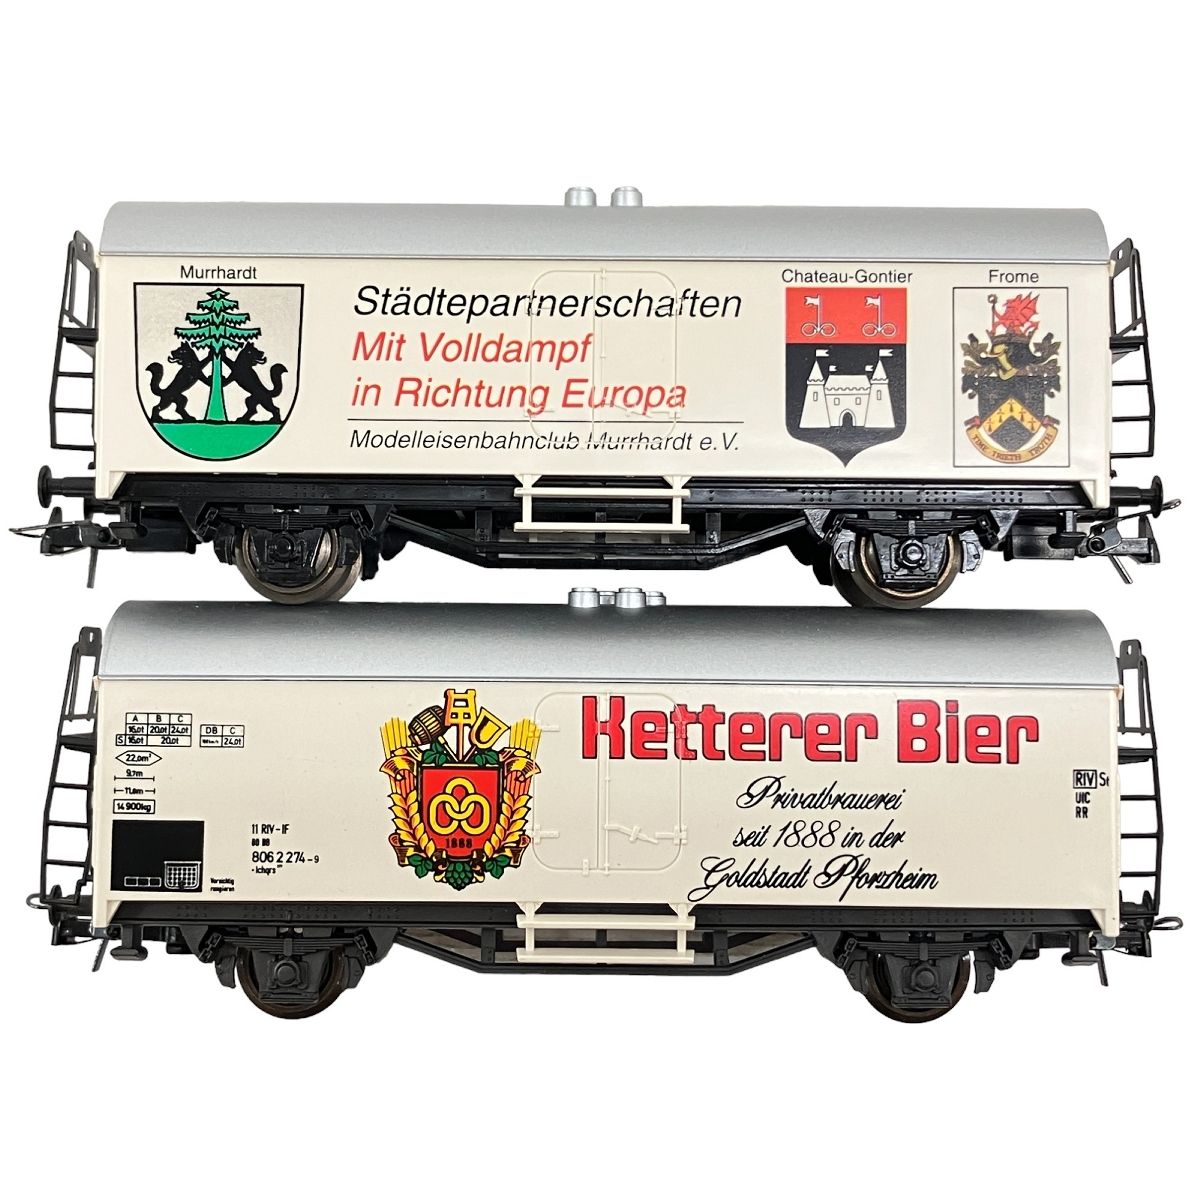 baur Modelleisenbahnclub Murrhardt e.V Ketterer Bier 貨車 2両 セット HOゲージ 鉄道模型  W8978318